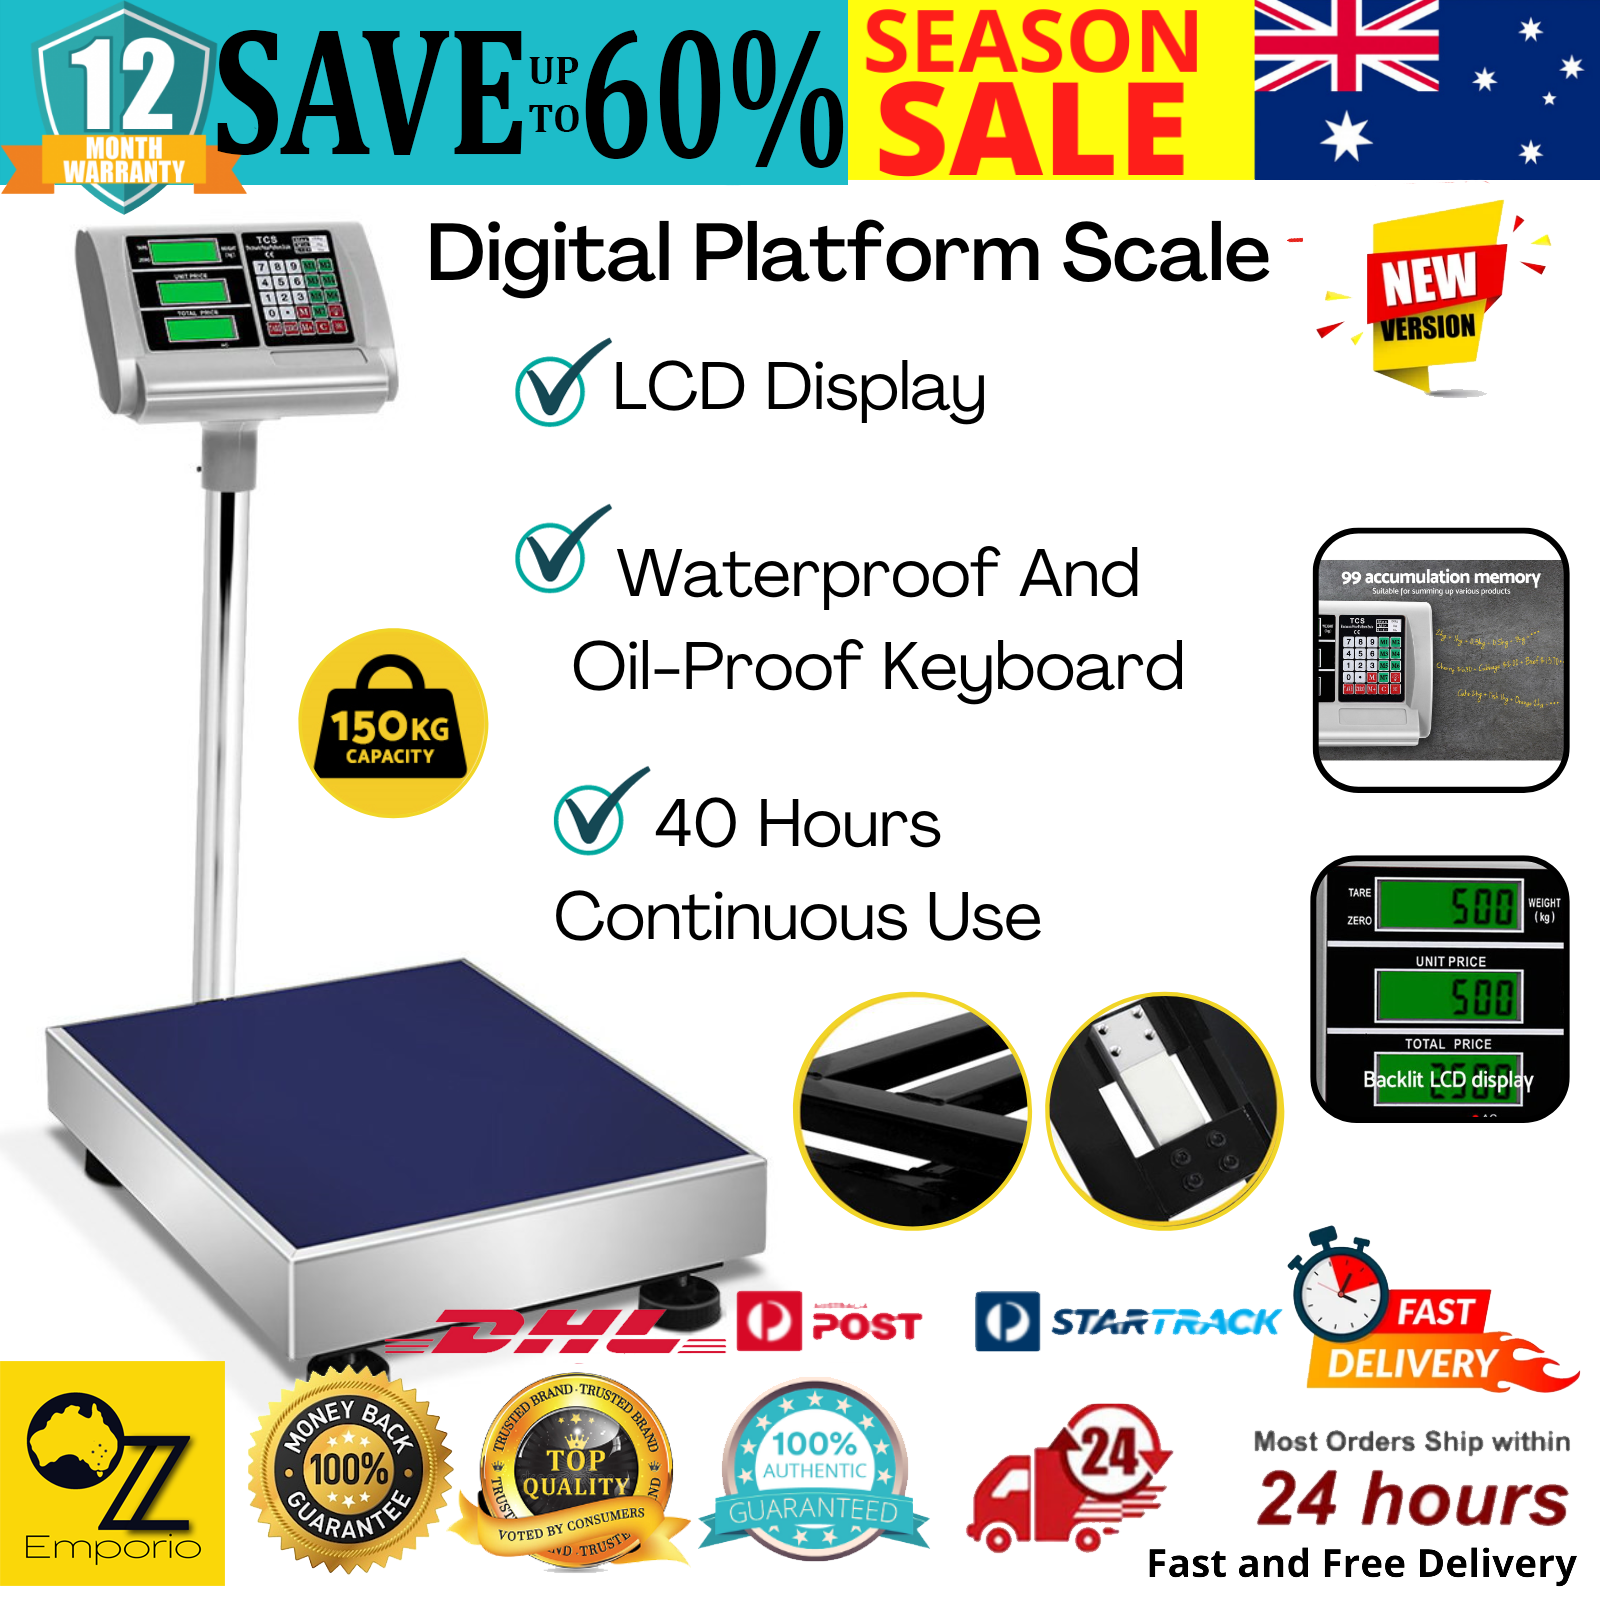 Digital Platform Scale